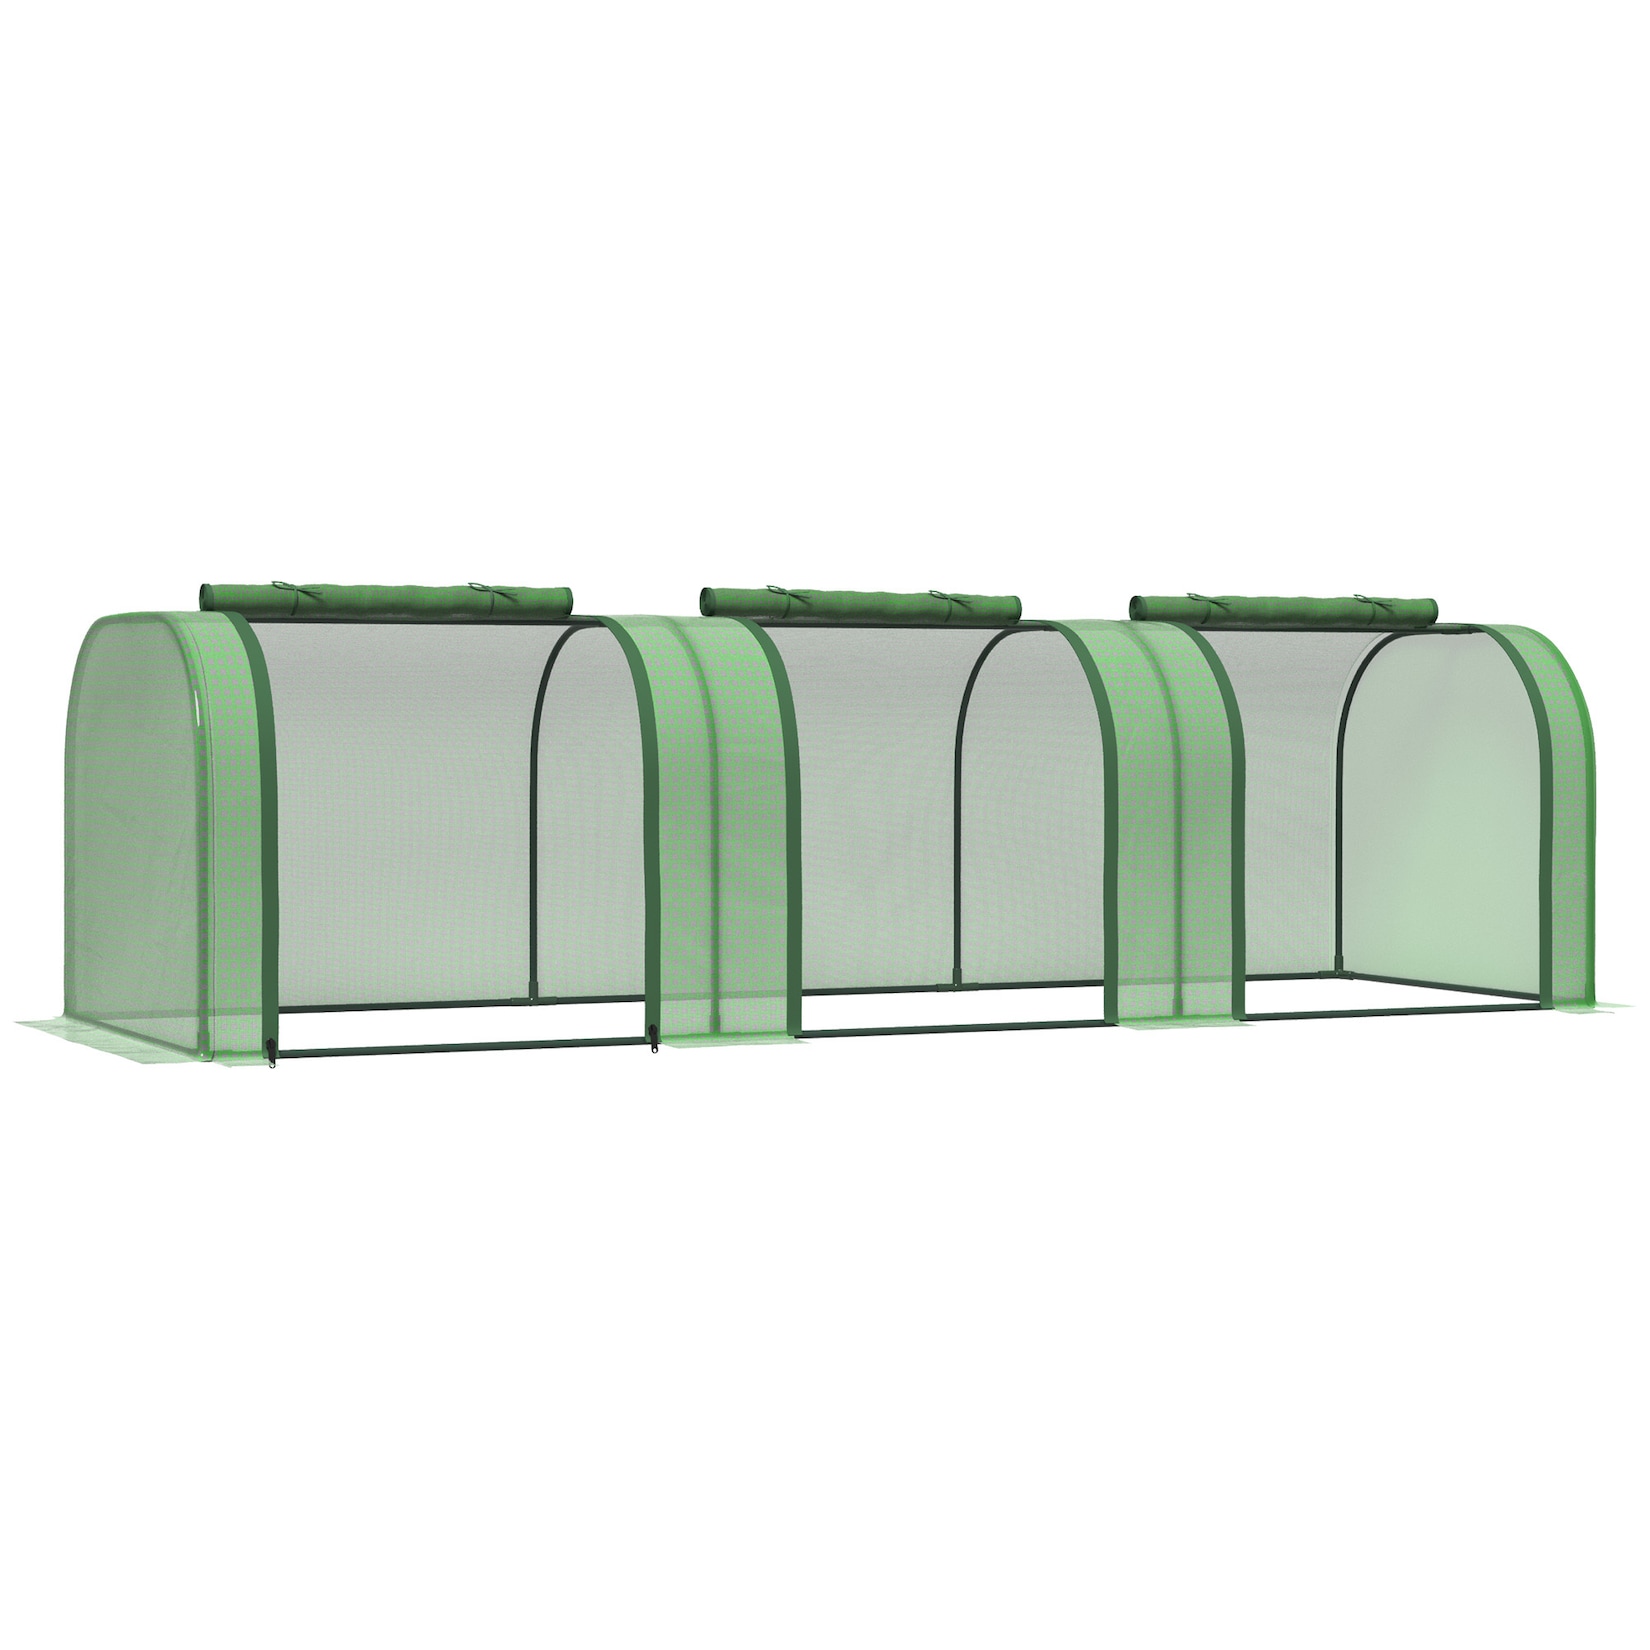 Outsunny Minifoliengewächshaus mit 3 Rolltüren grün 295L x 100B x 80H cm